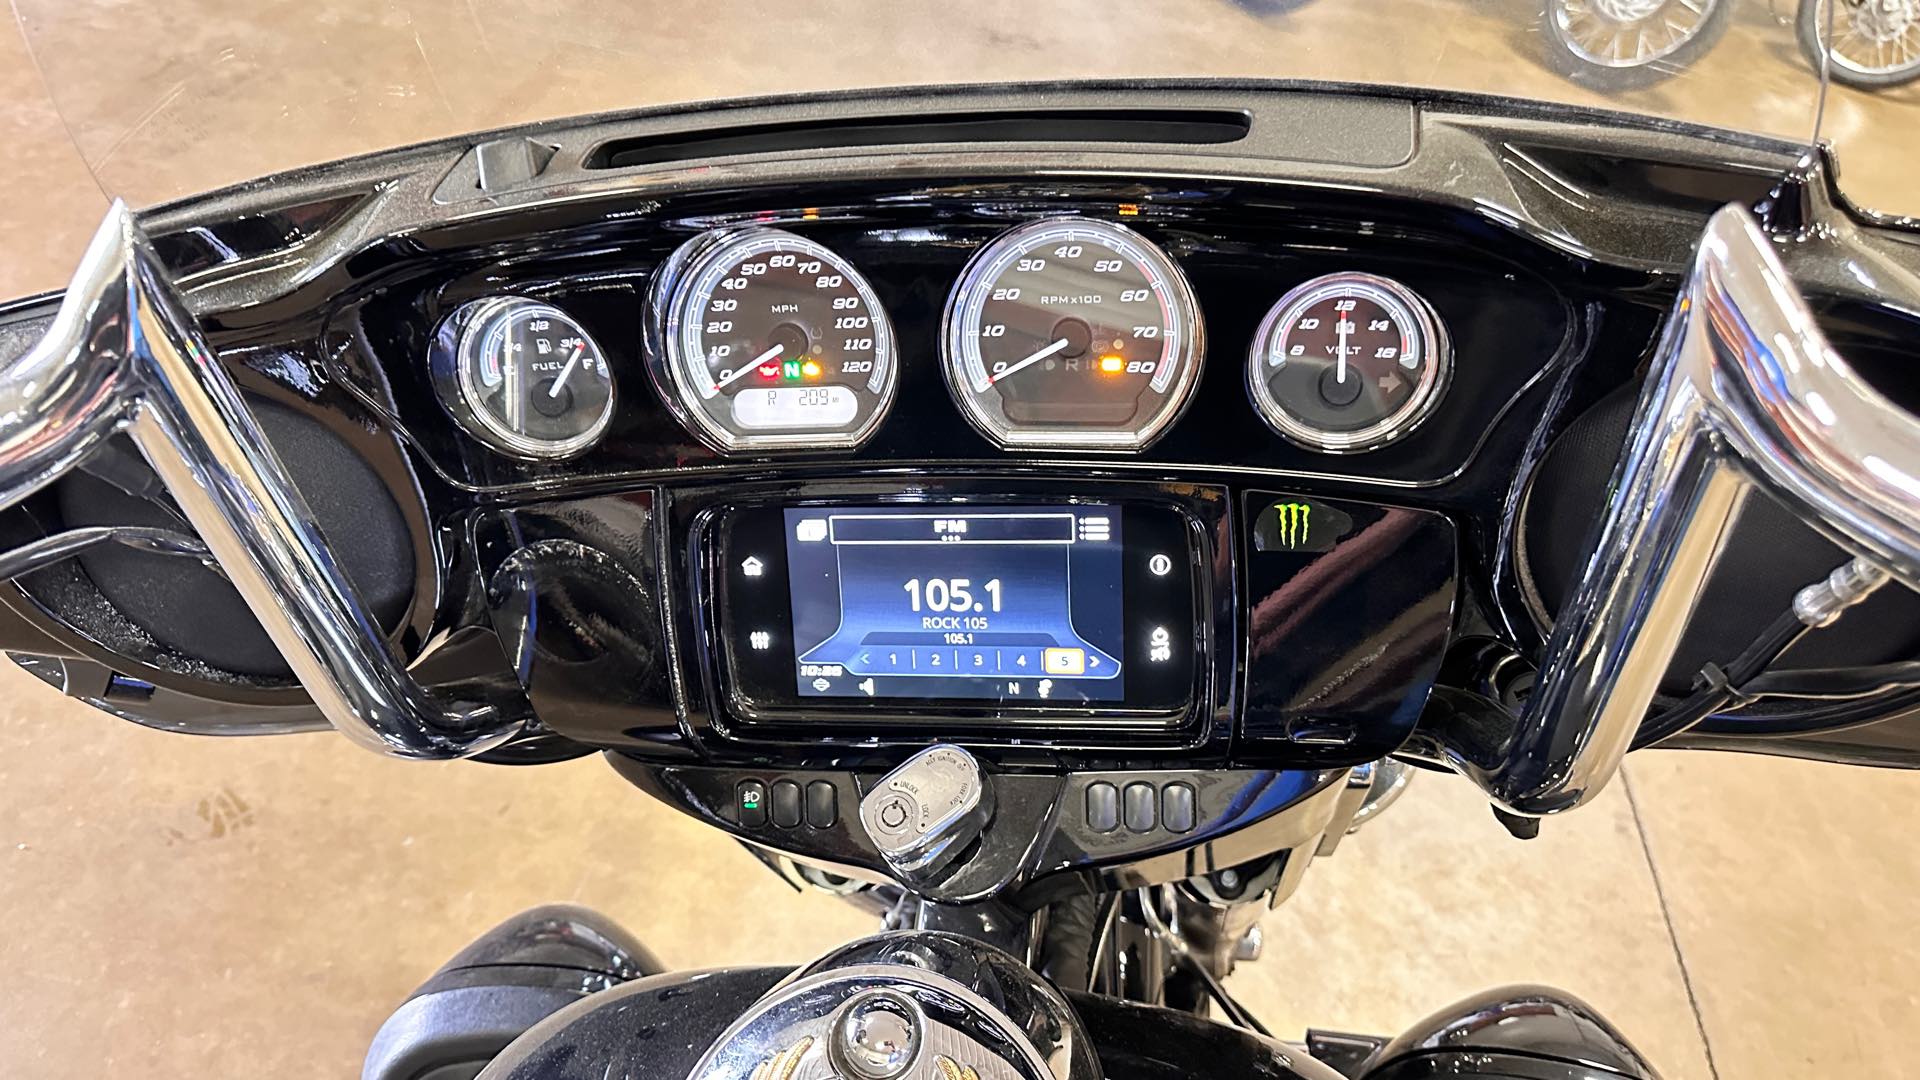 2019 Harley-Davidson Electra Glide Ultra Limited at Southern Illinois Motorsports